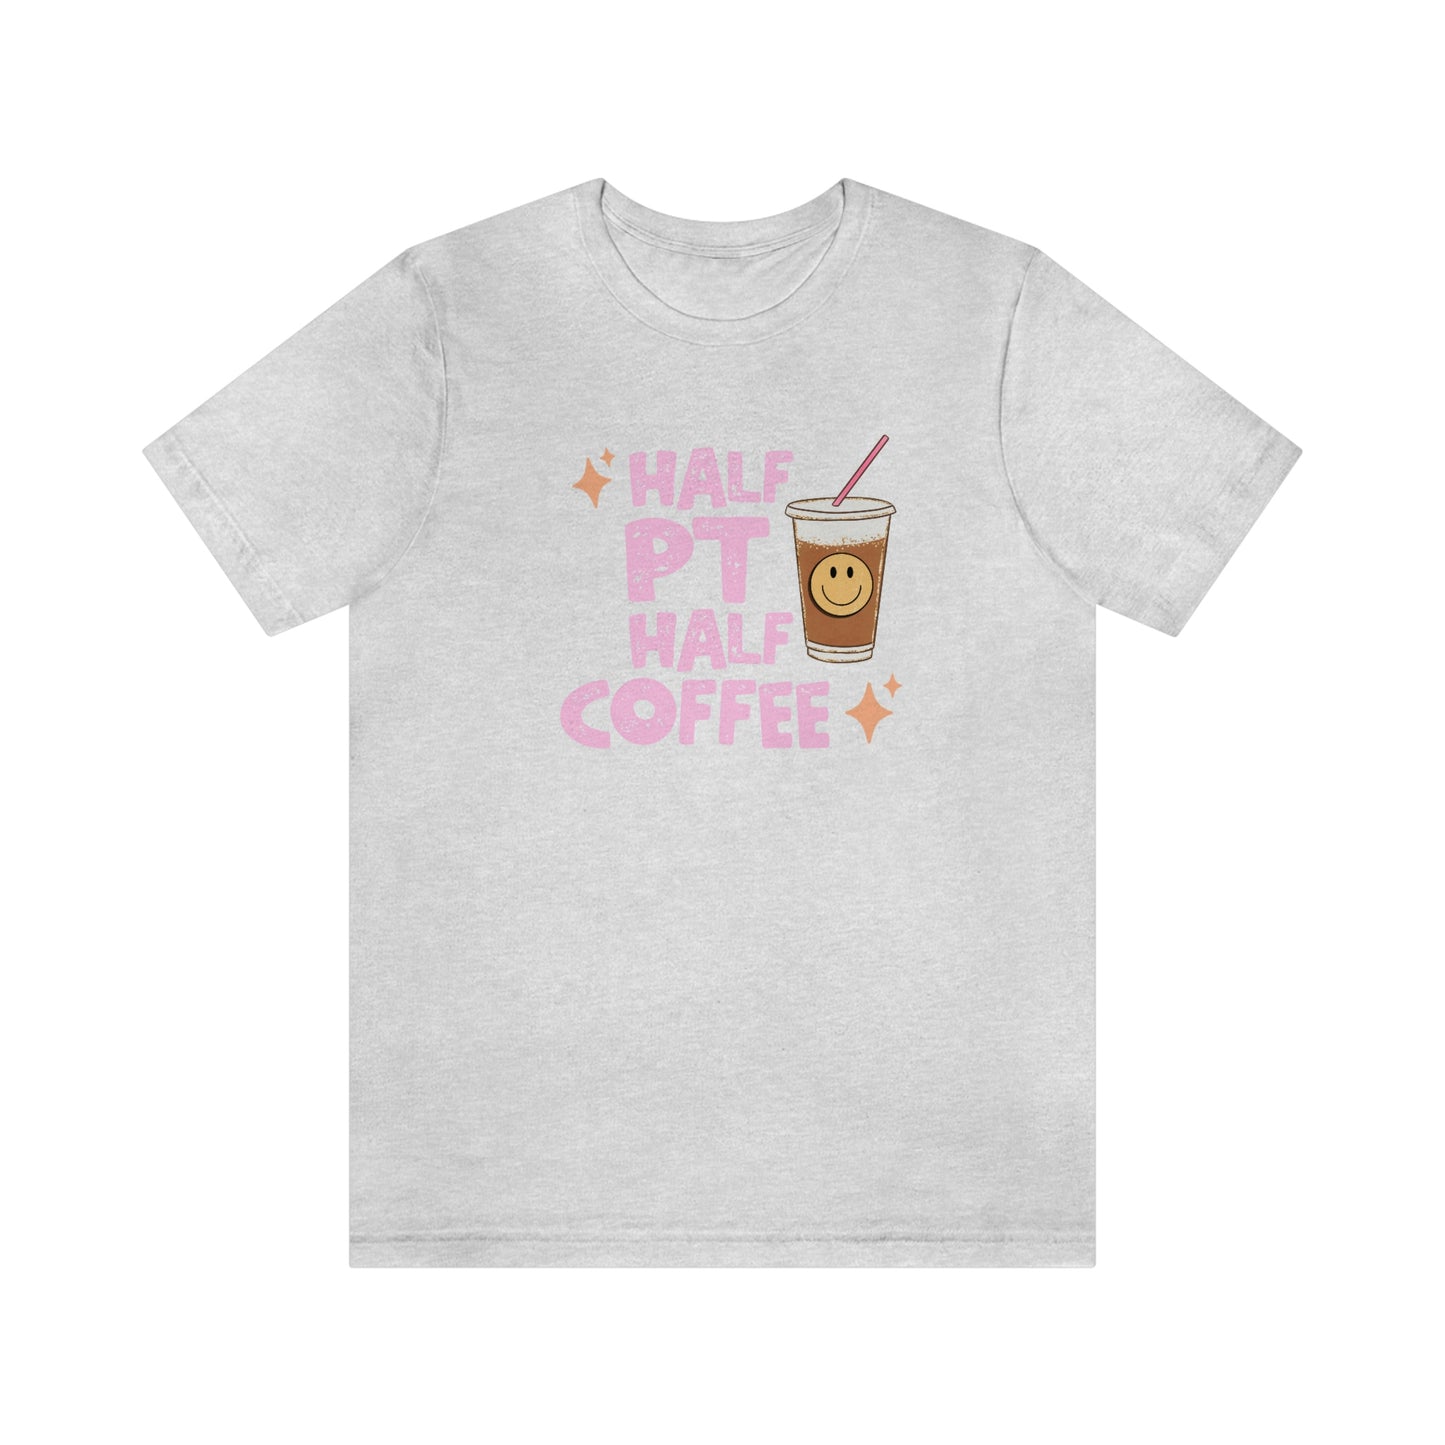 Half PT Half Coffee Jersey T-Shirt